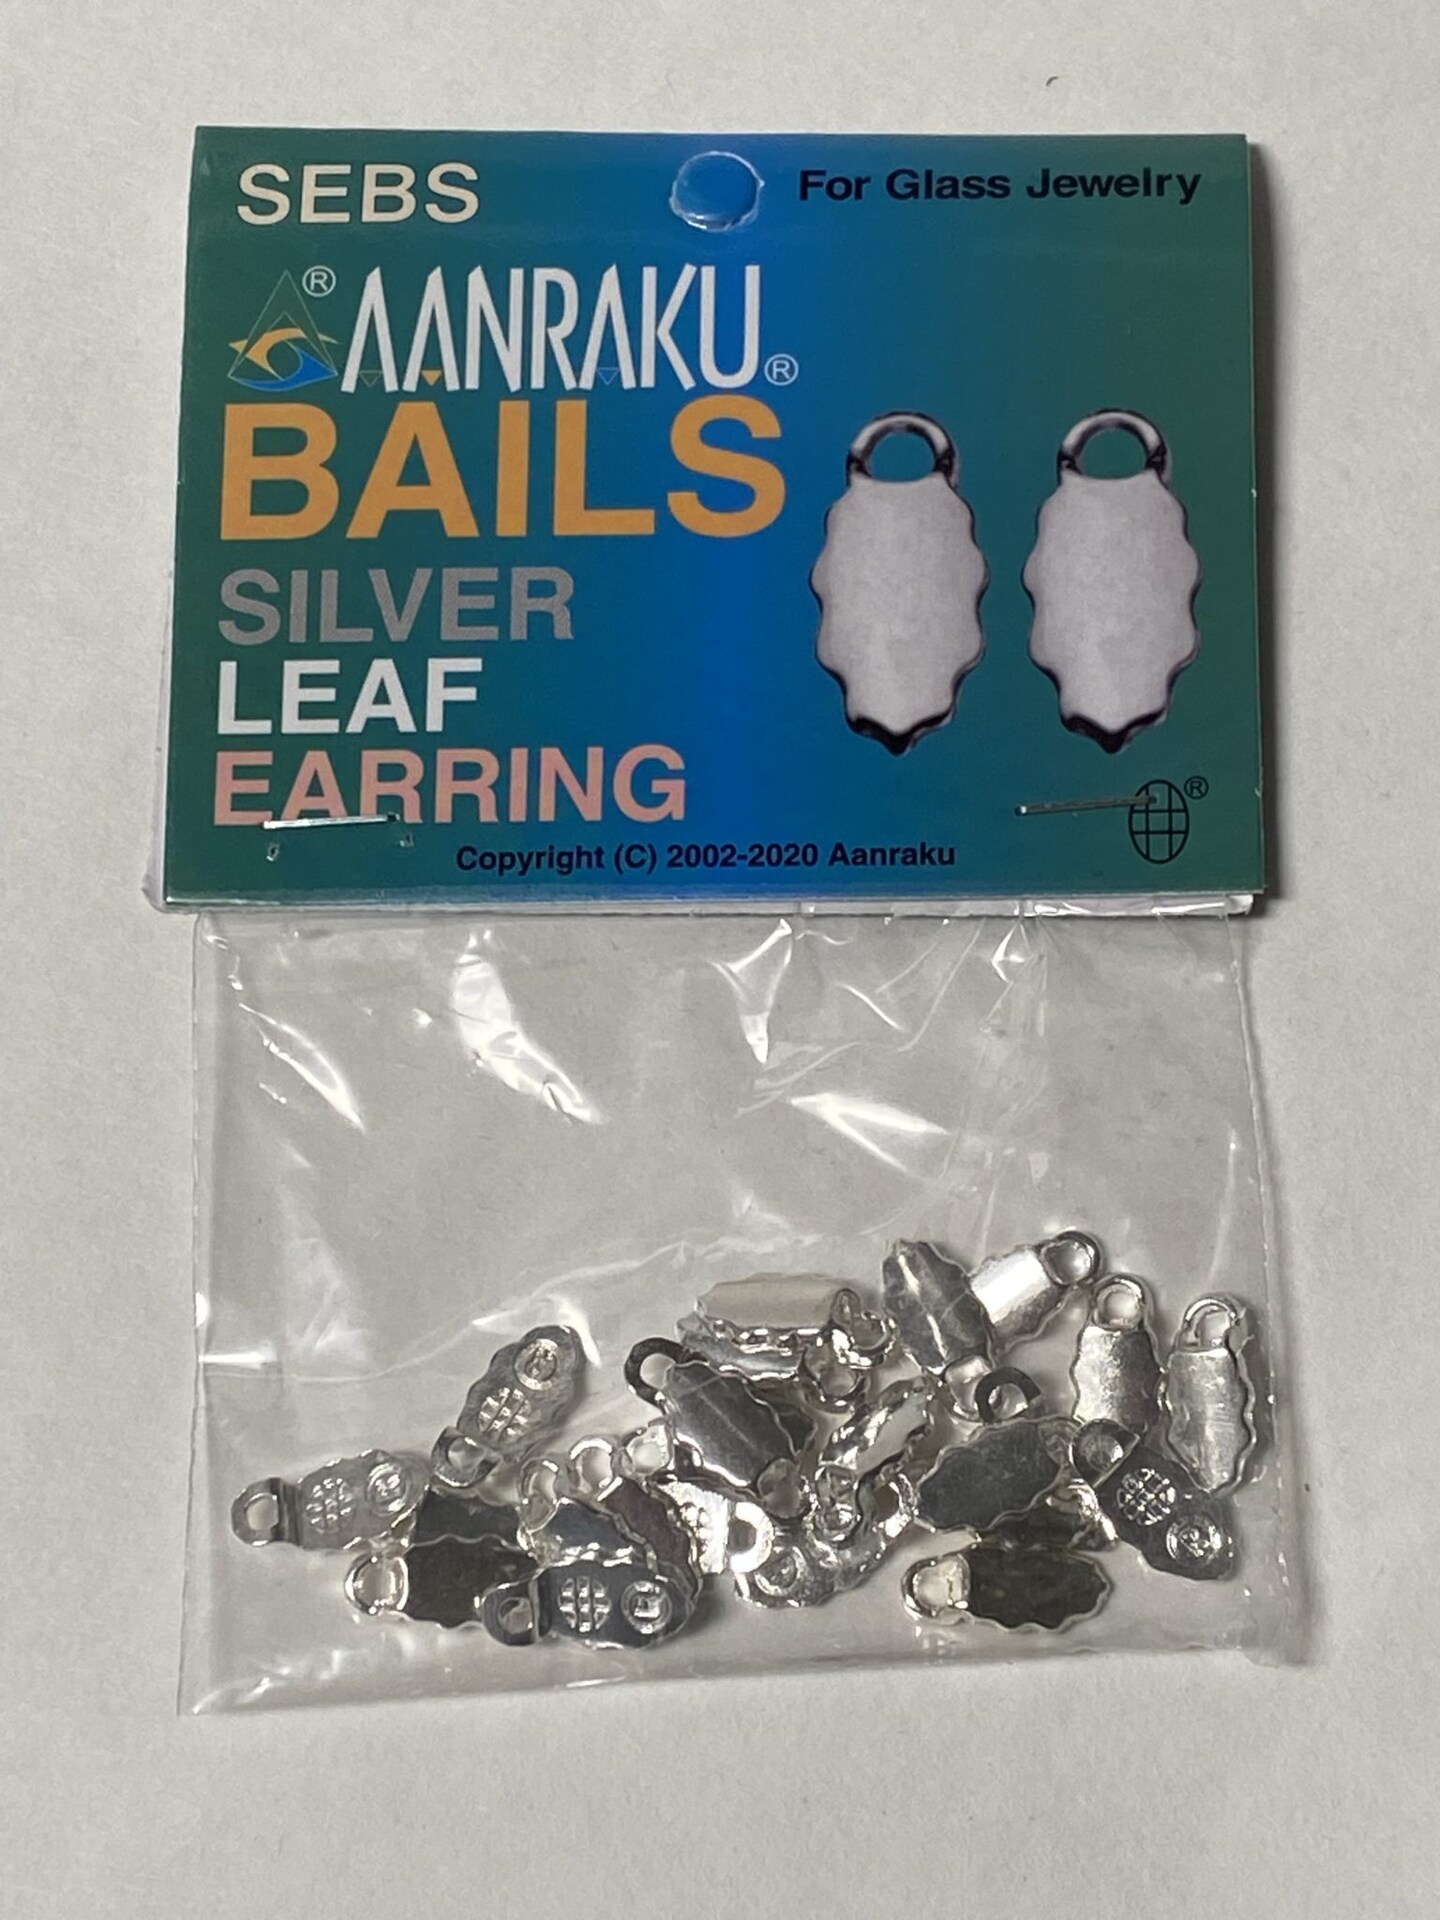 Silver Leaf Earring Bails